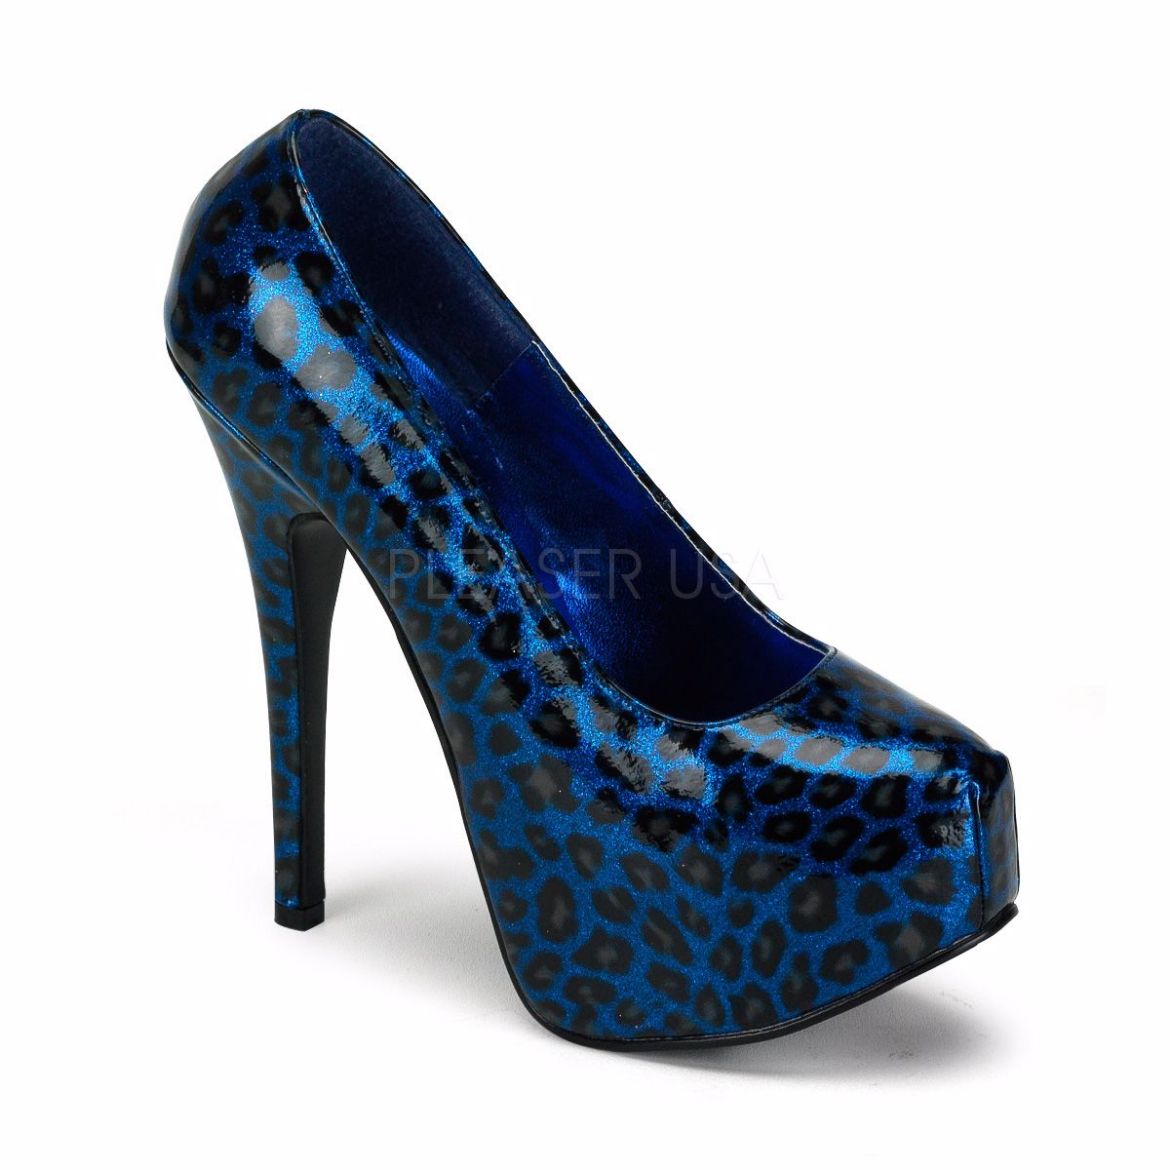 Product image of Bordello Teeze-37 Blue Cheetah Patent, 5 3/4 inch (14.6 cm) Heel, 1 3/4 inch (4.4 cm) Platform Court Pump Shoes